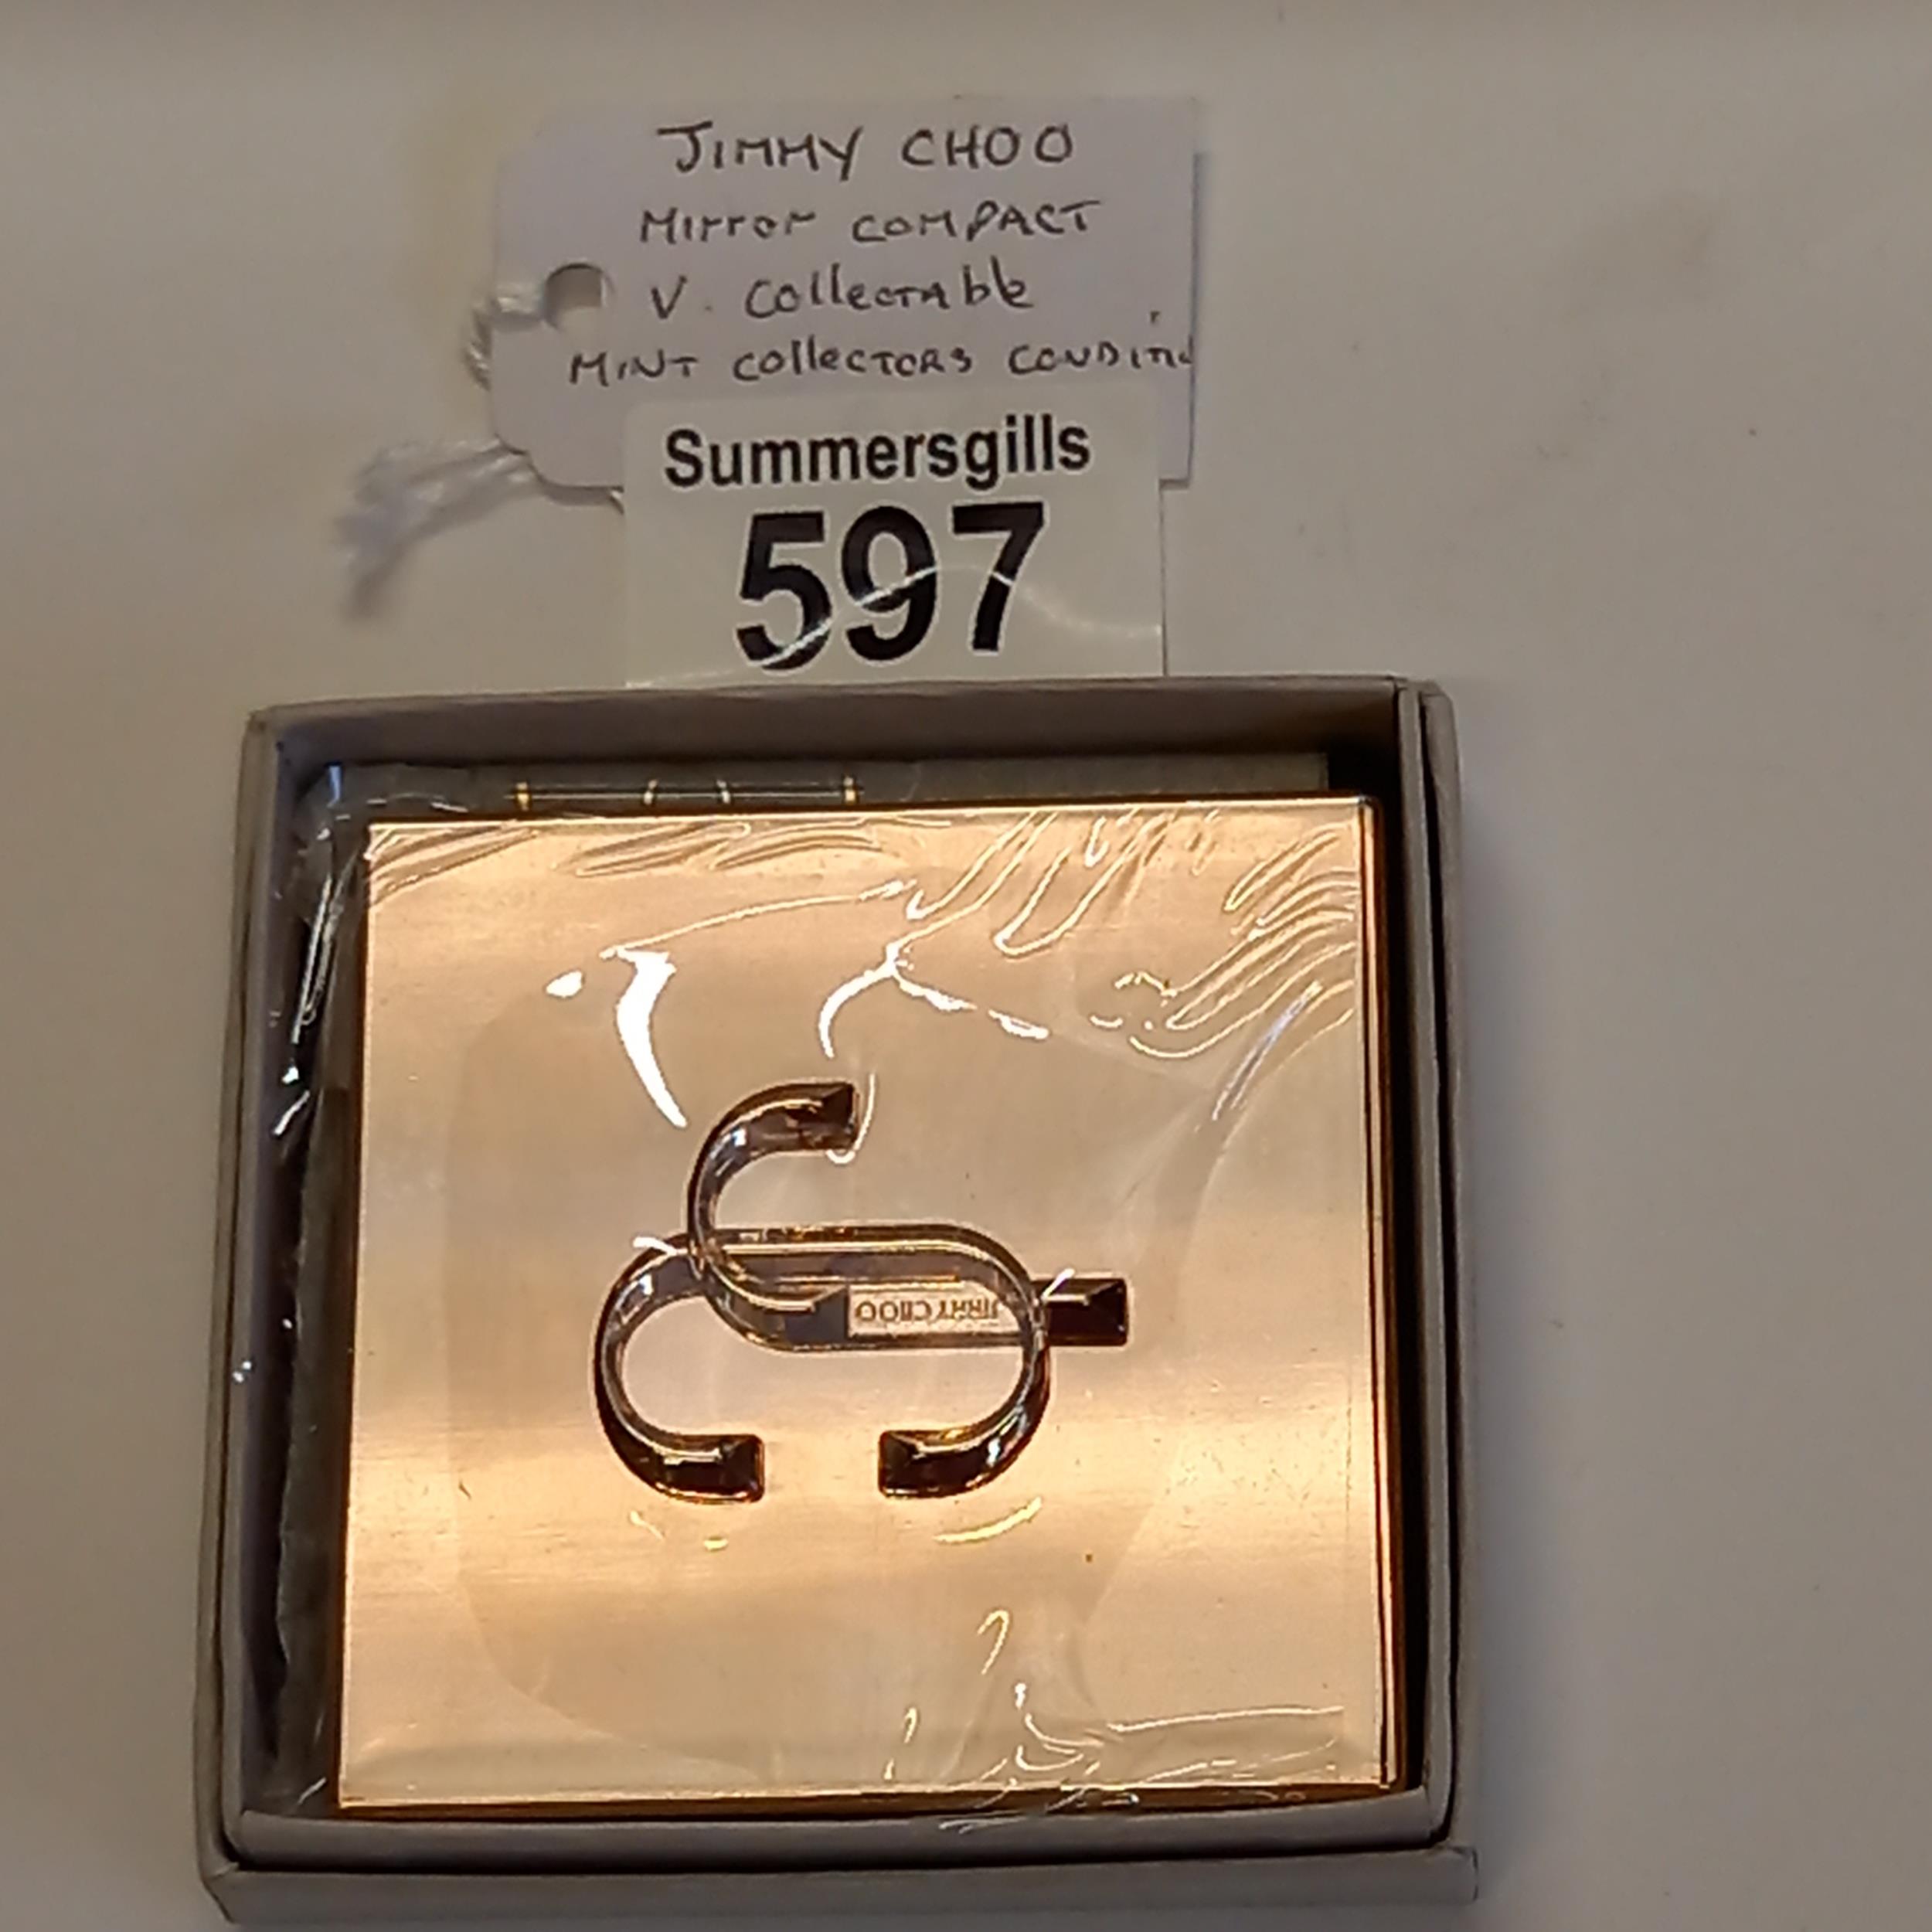 Jimmy Choo compact double mirror in original box